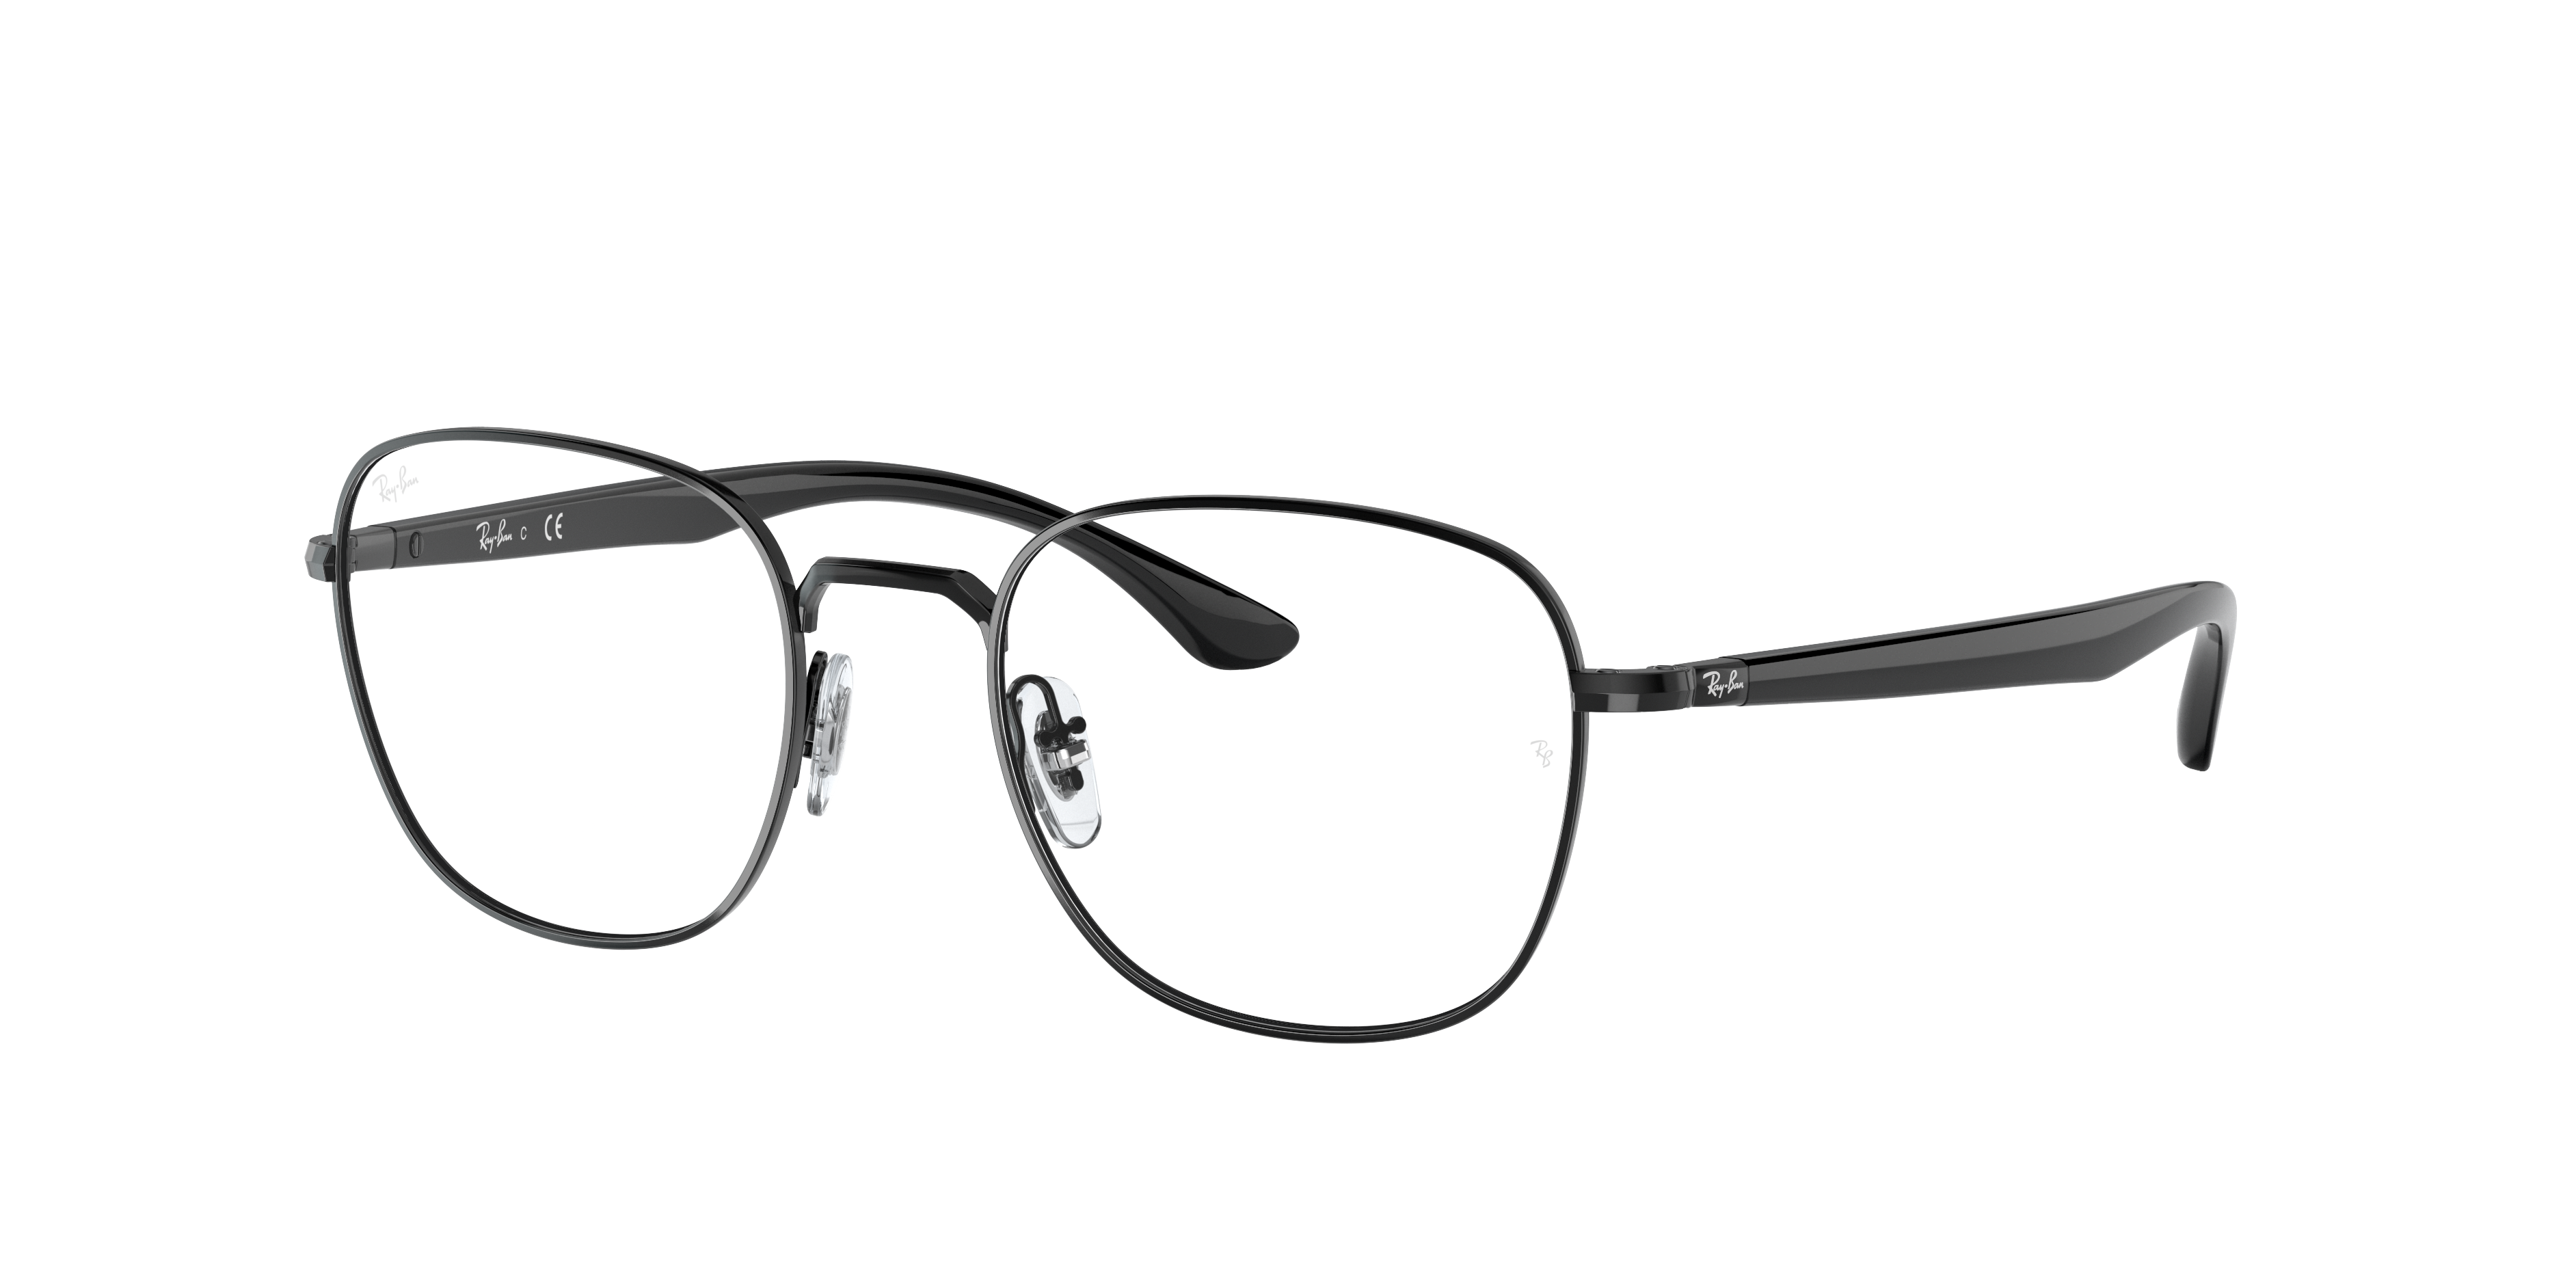 Rb6477 Optics Eyeglasses with Black Frame | Ray-Ban®